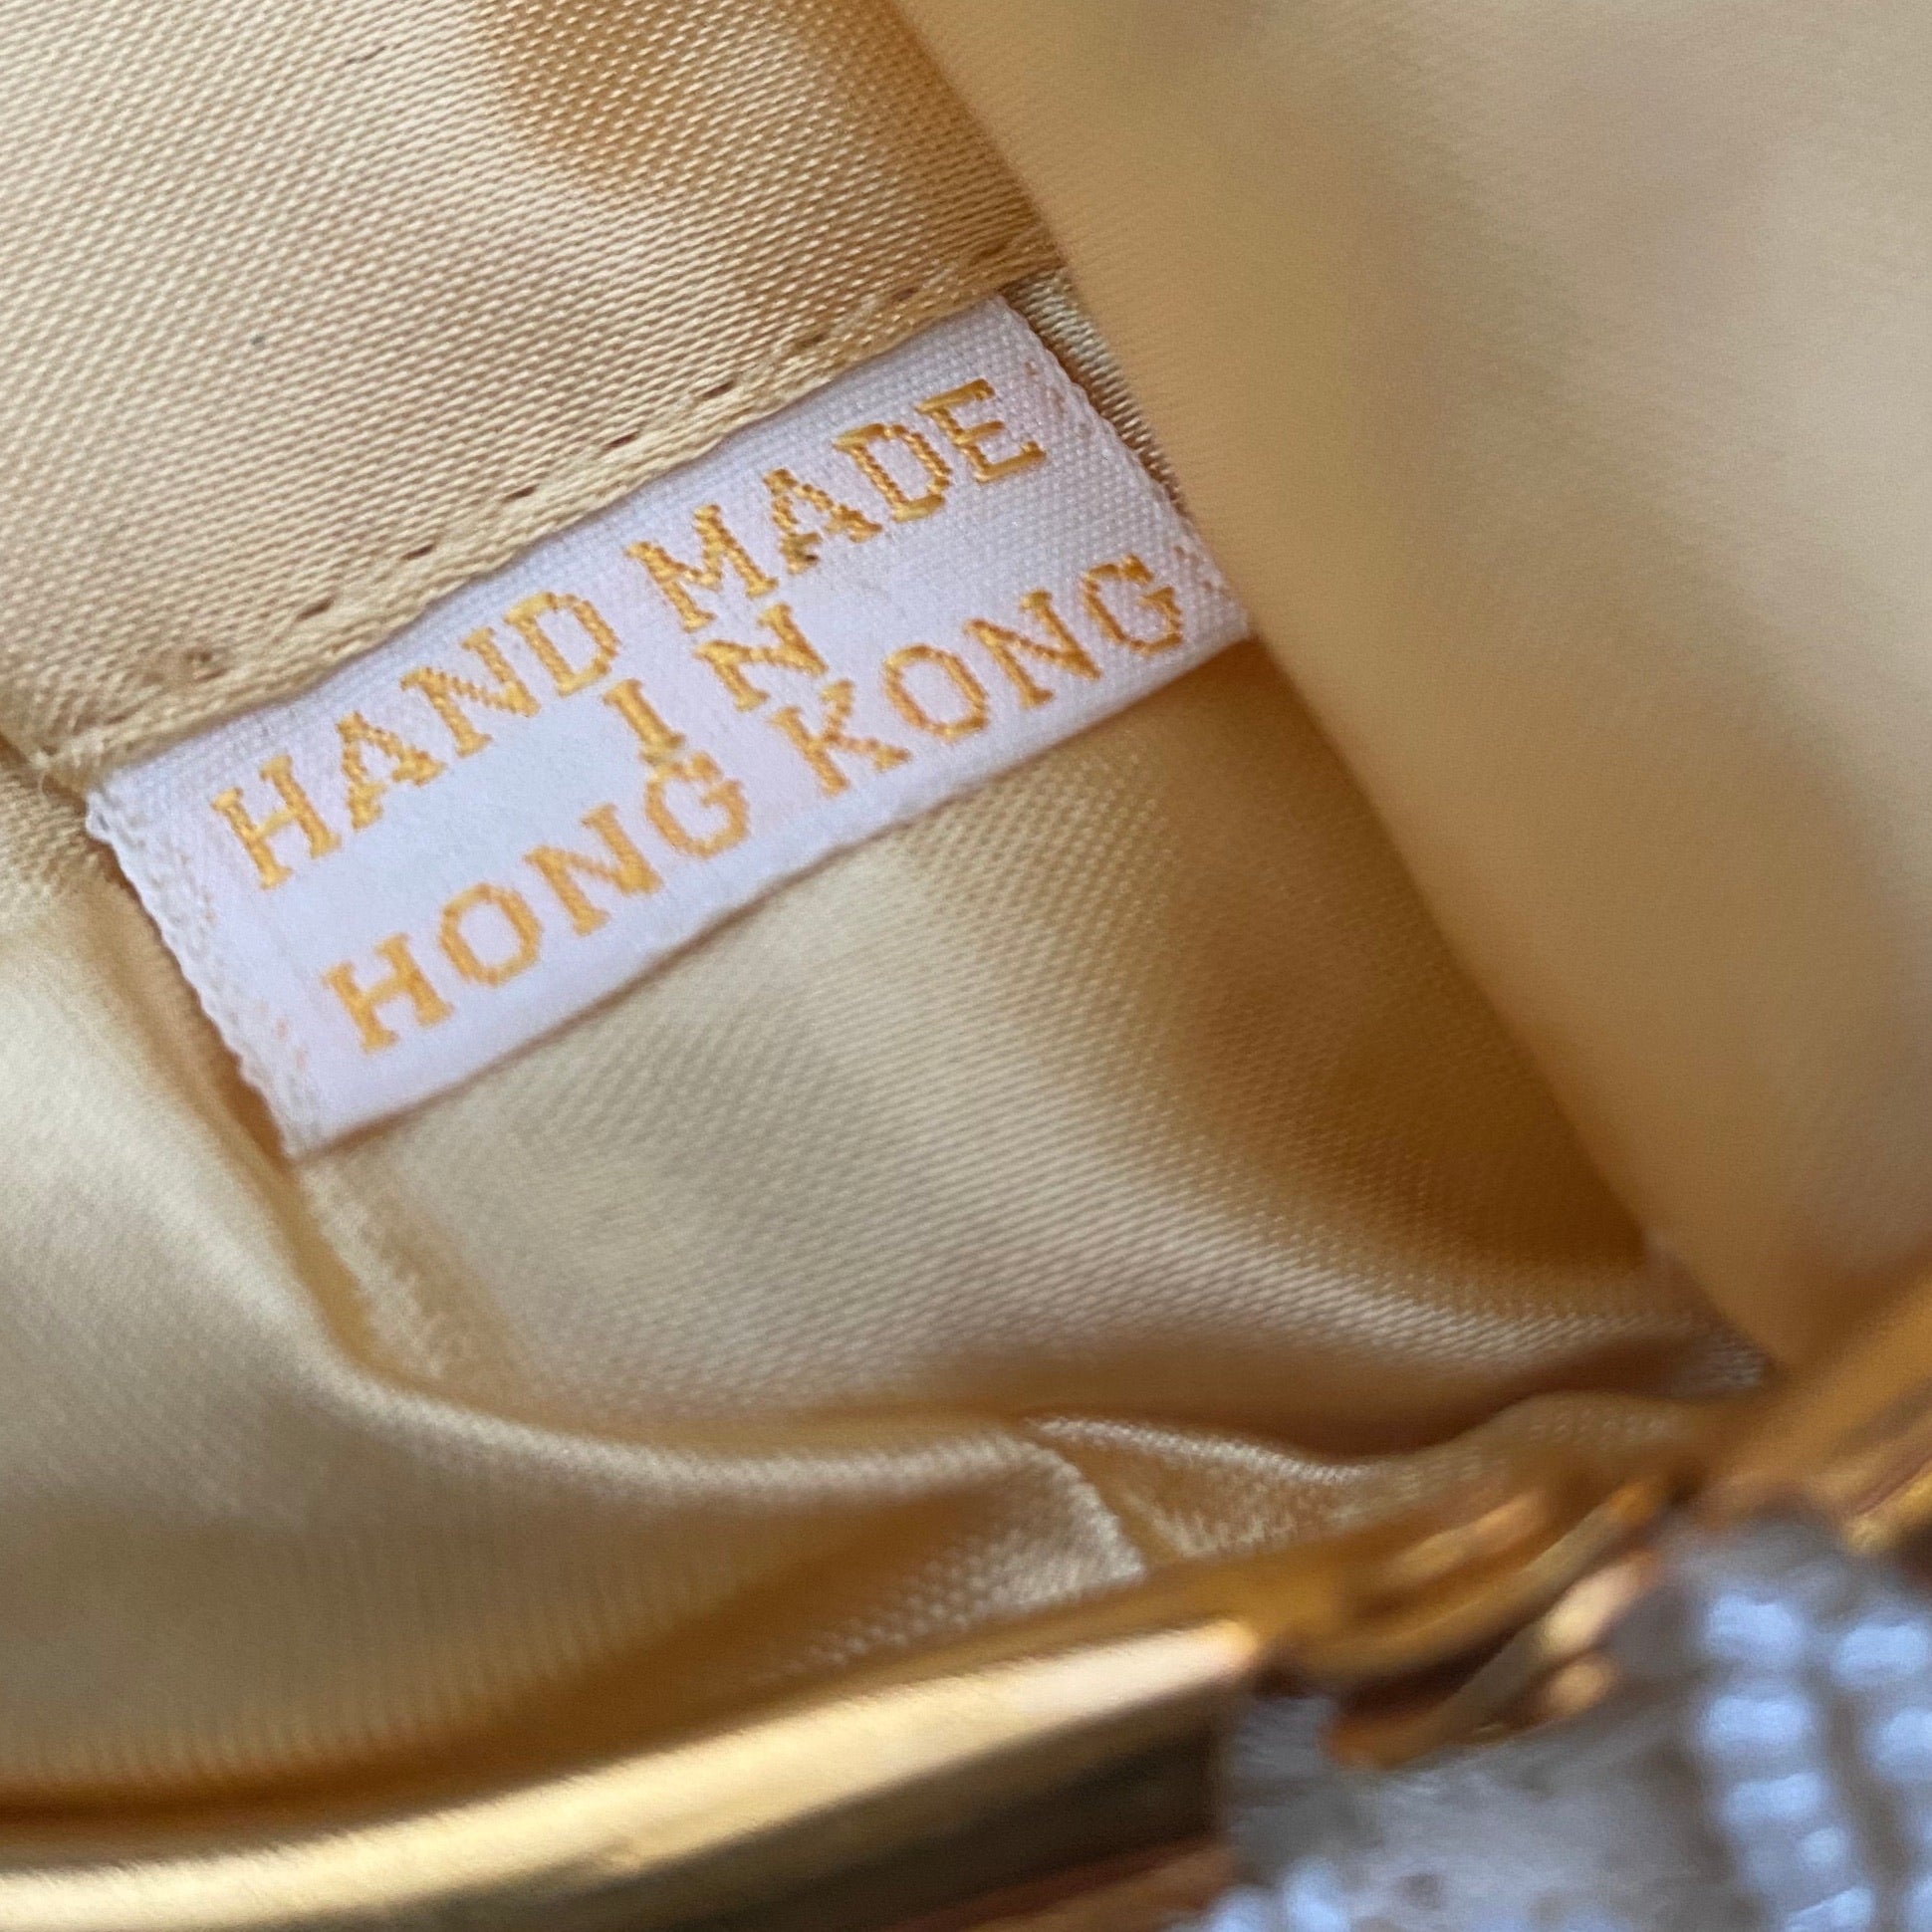 Circa 1950s Hong Kong Made Sequin Beaded White Purse/Handbag - D & L Vintage